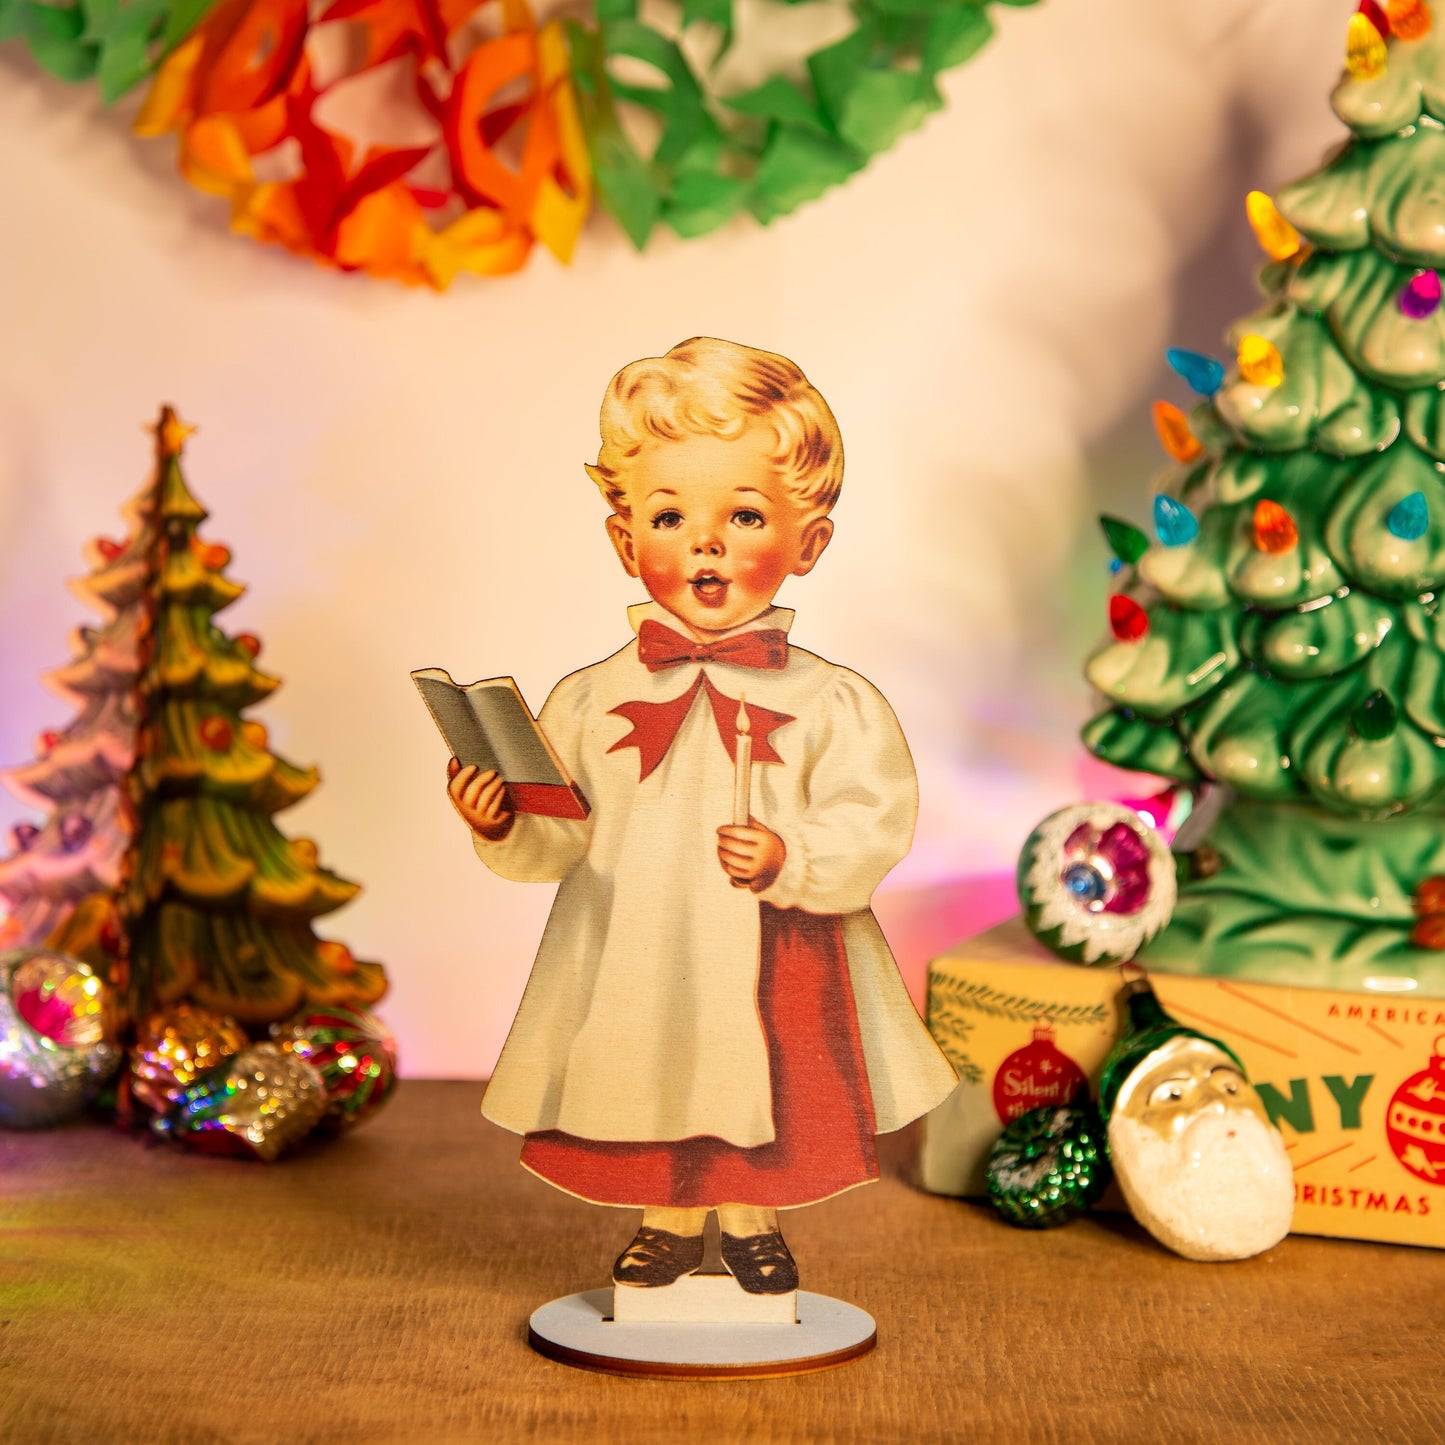 Retro Christmas Decoration Choir Boy's wooden ornament, holiday decor, christmas decor laser cut unique Christmas